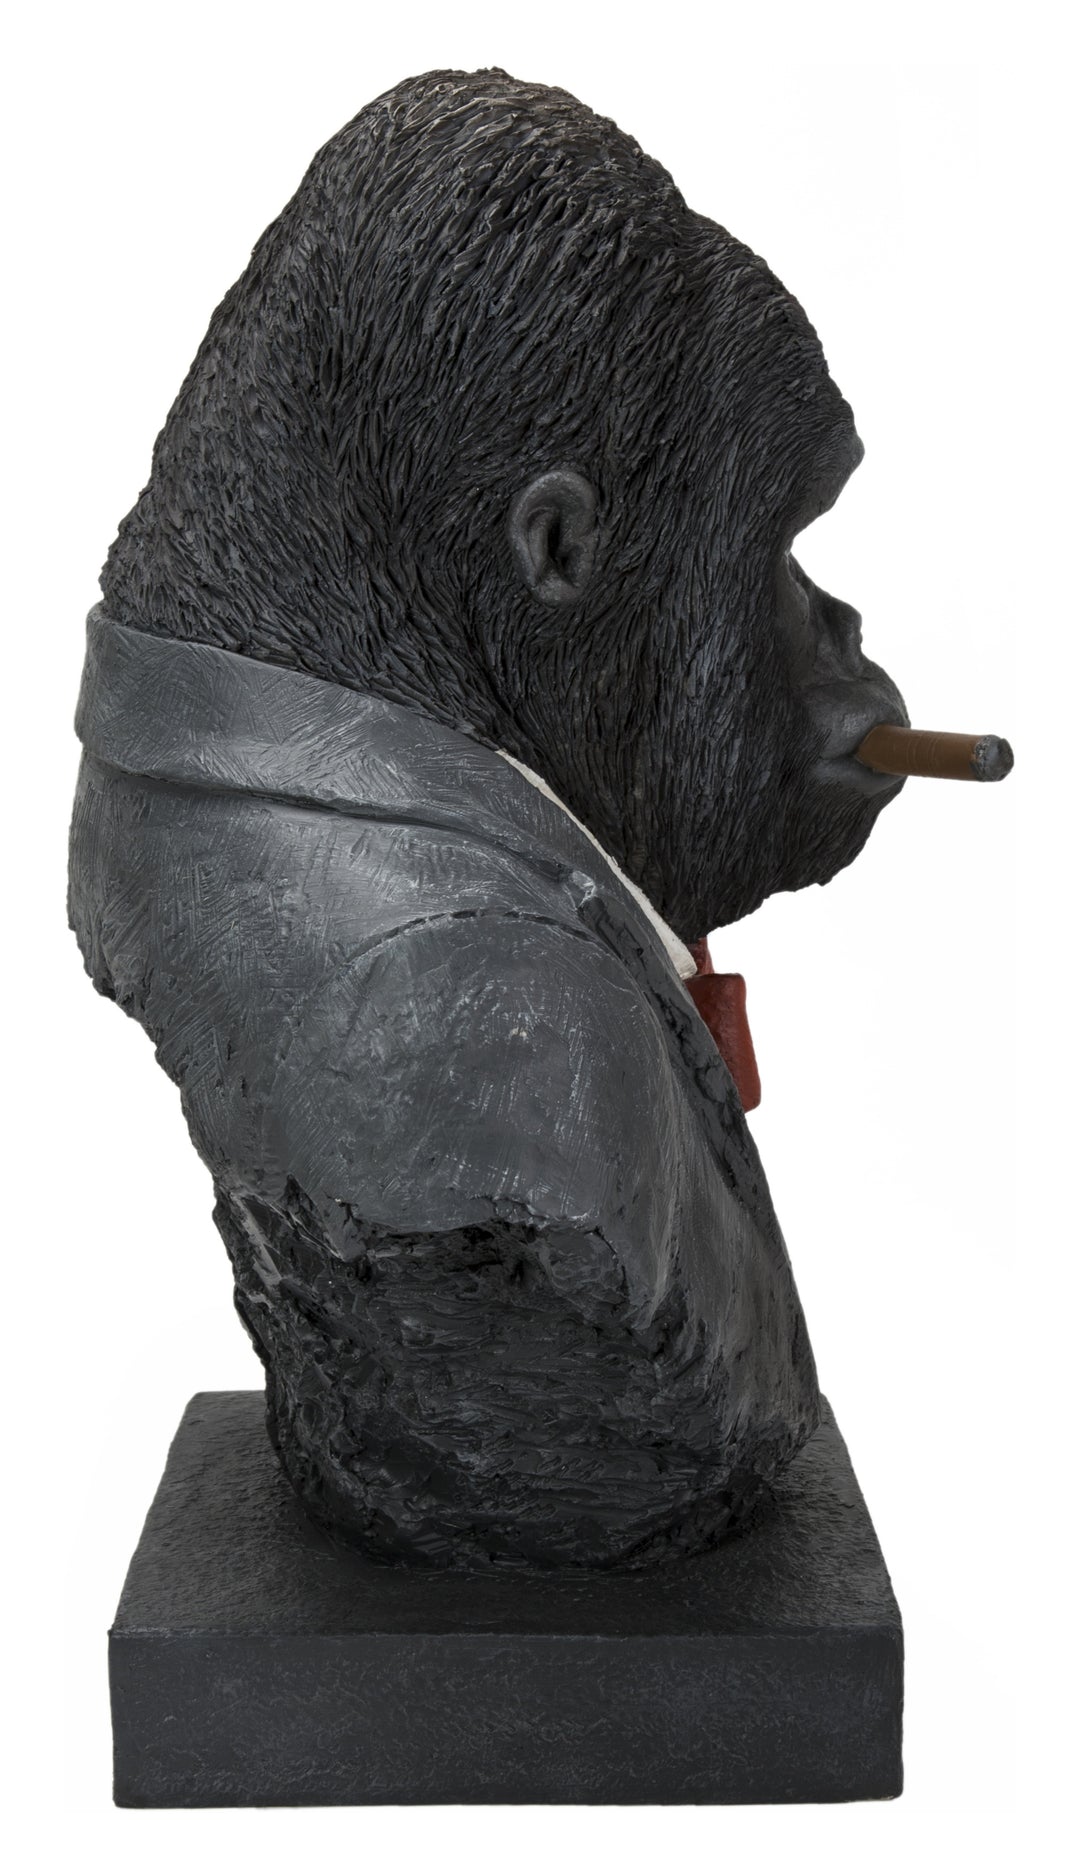 Gorilla Head With Tux HI-LINE GIFT LTD.